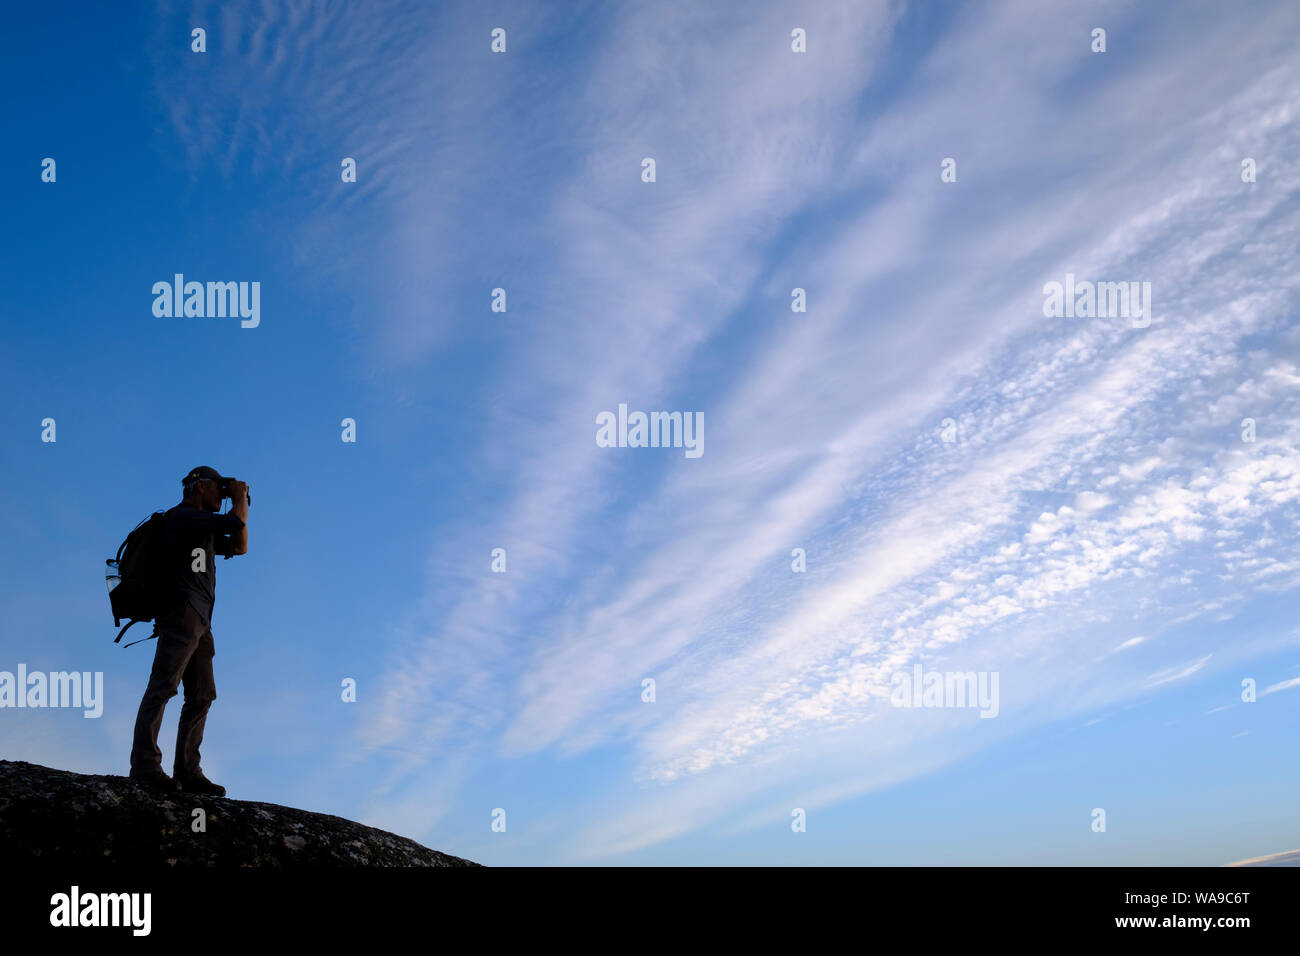 Birdwatcher silhouetted against clouds. Taejo International Park. Extremadura. Spain. Stock Photo